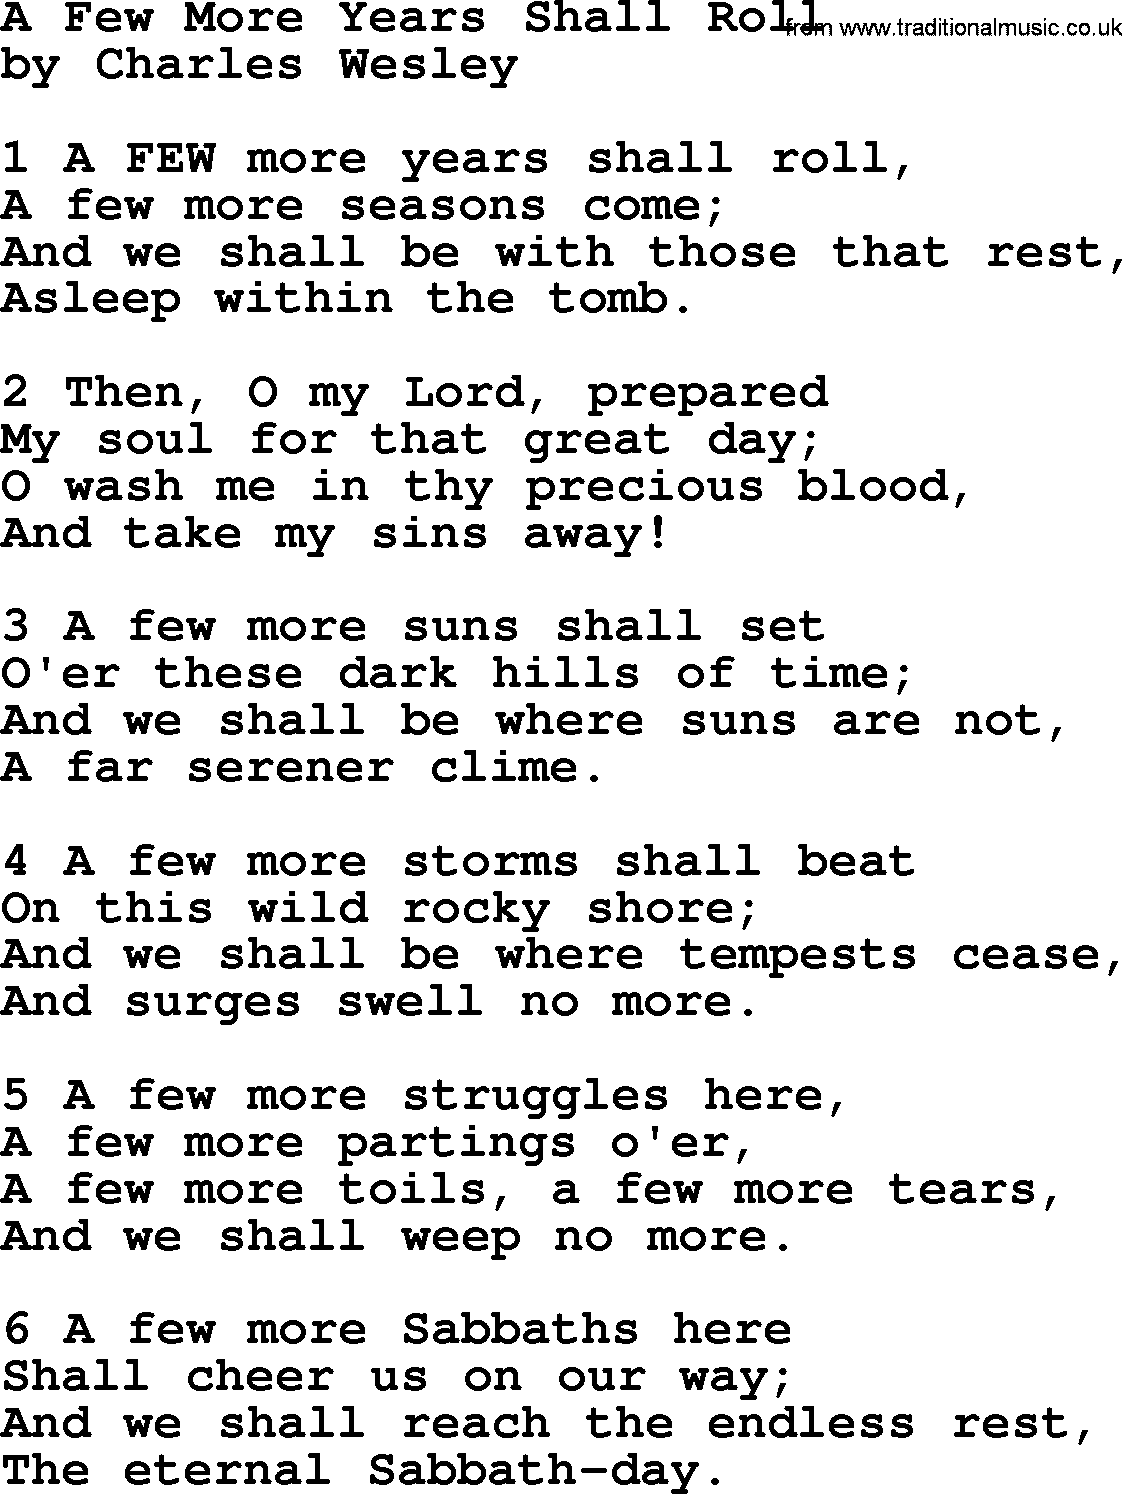 Charles Wesley hymn: A Few More Years Shall Roll, lyrics